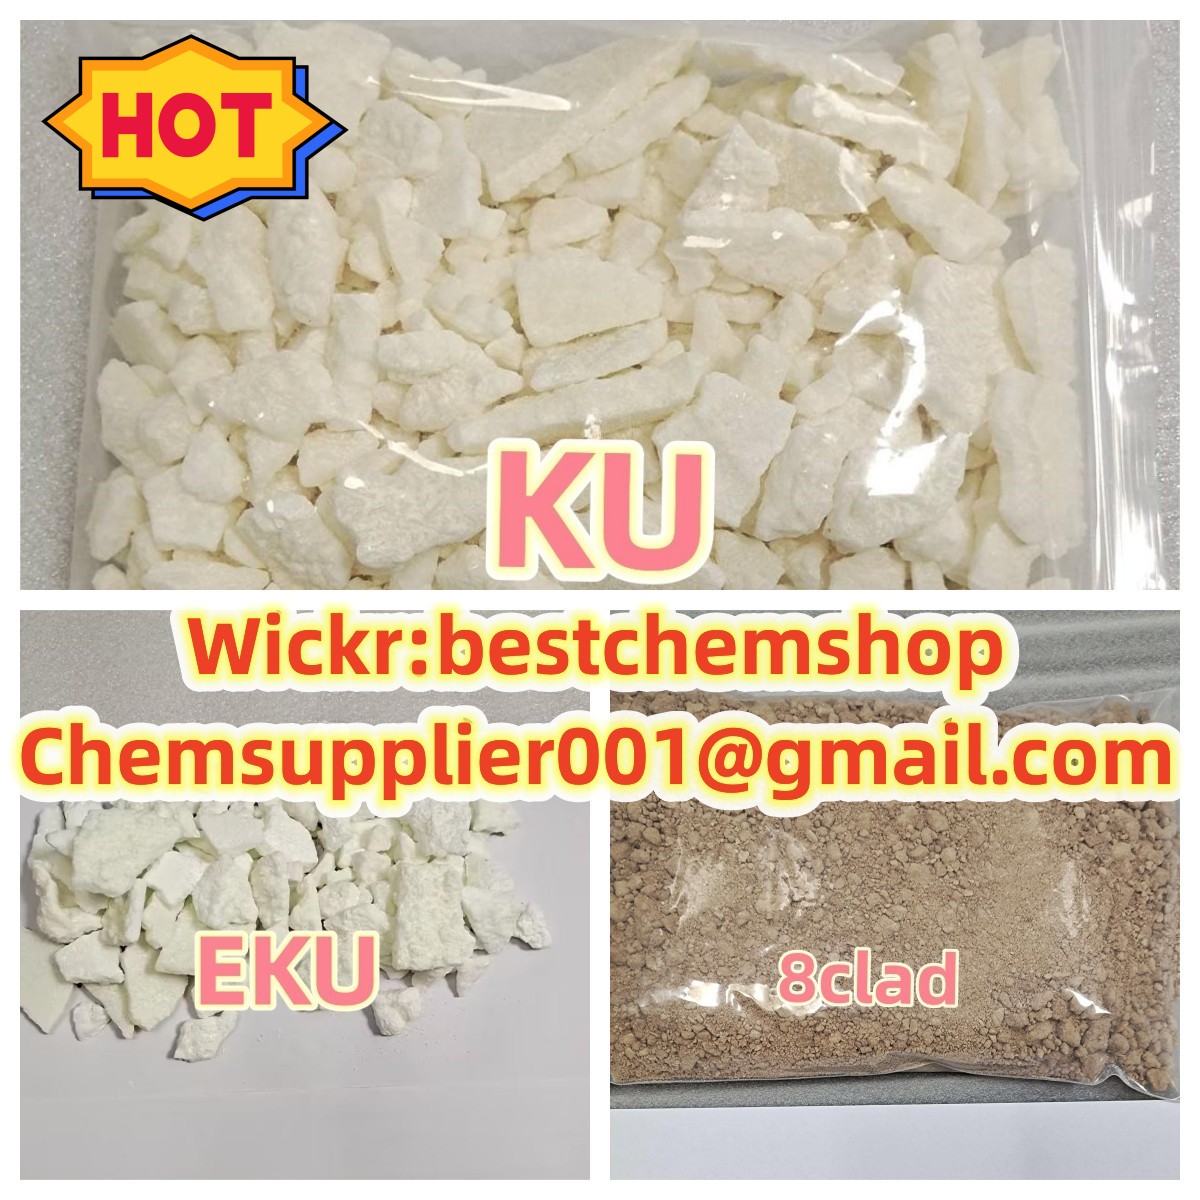 KU crystal, EKU crystal ,8clad, research chemical products